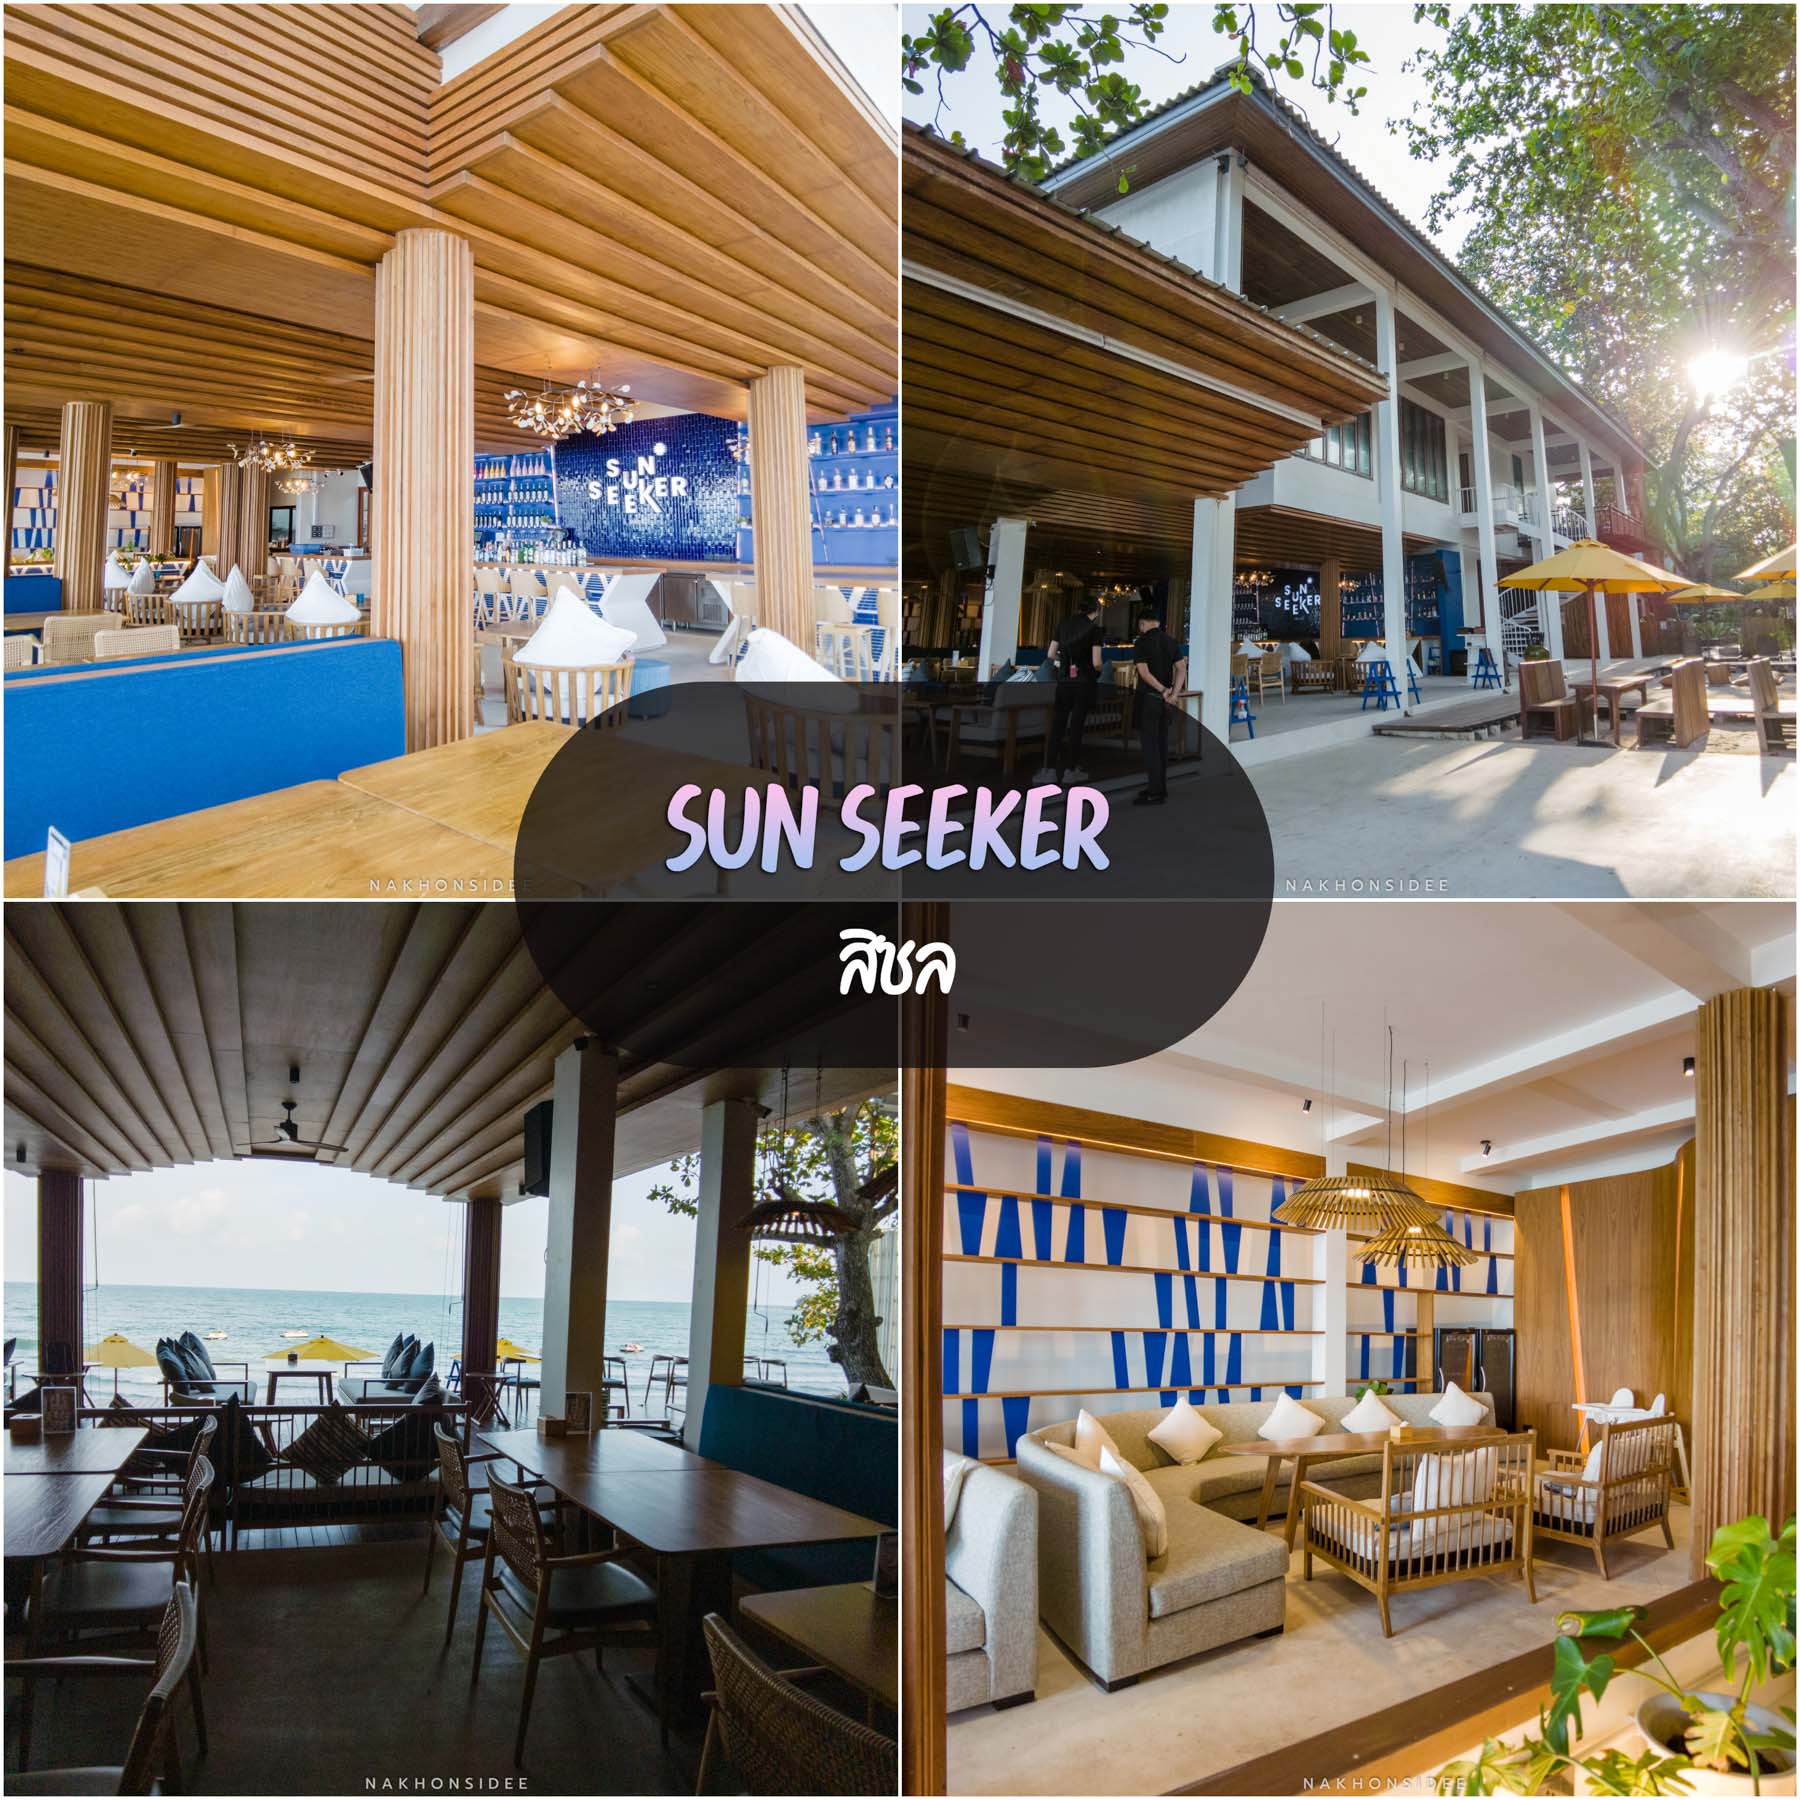 33.-Sun-Seeker ร้านอาหารเปิดใหม่-หน้าโรงแรมสิชลคาบาน่า สิชล,ขนอม,ที่พัก,ของกิน,โรงแรม,ที่เที่ยว,จุดเช็คอิน,วัดเจดีย์,ตาไข่